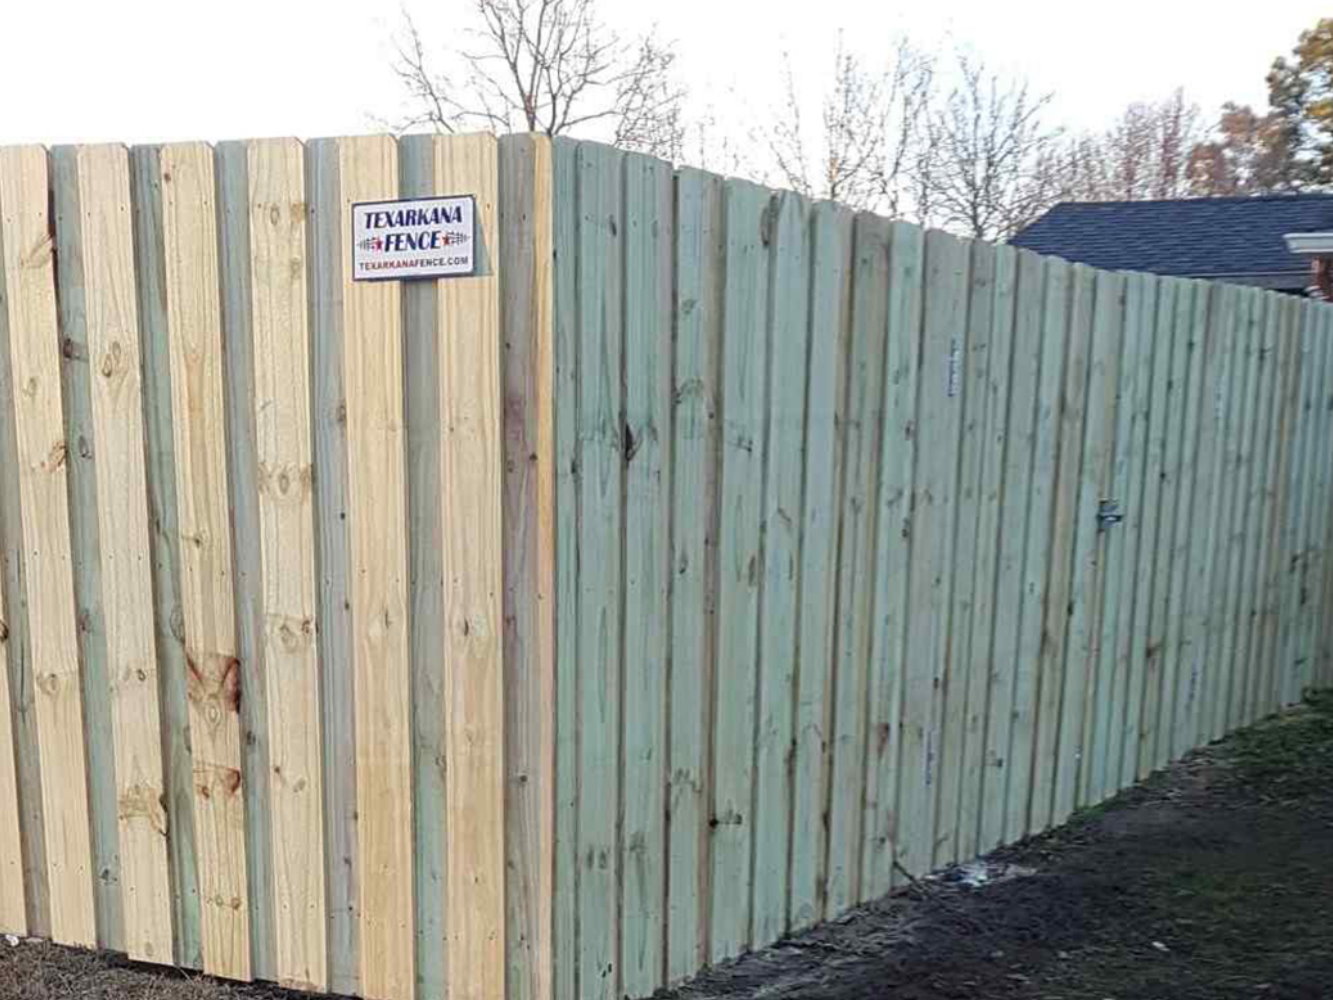 Ferguson AR shadowbox style wood fence